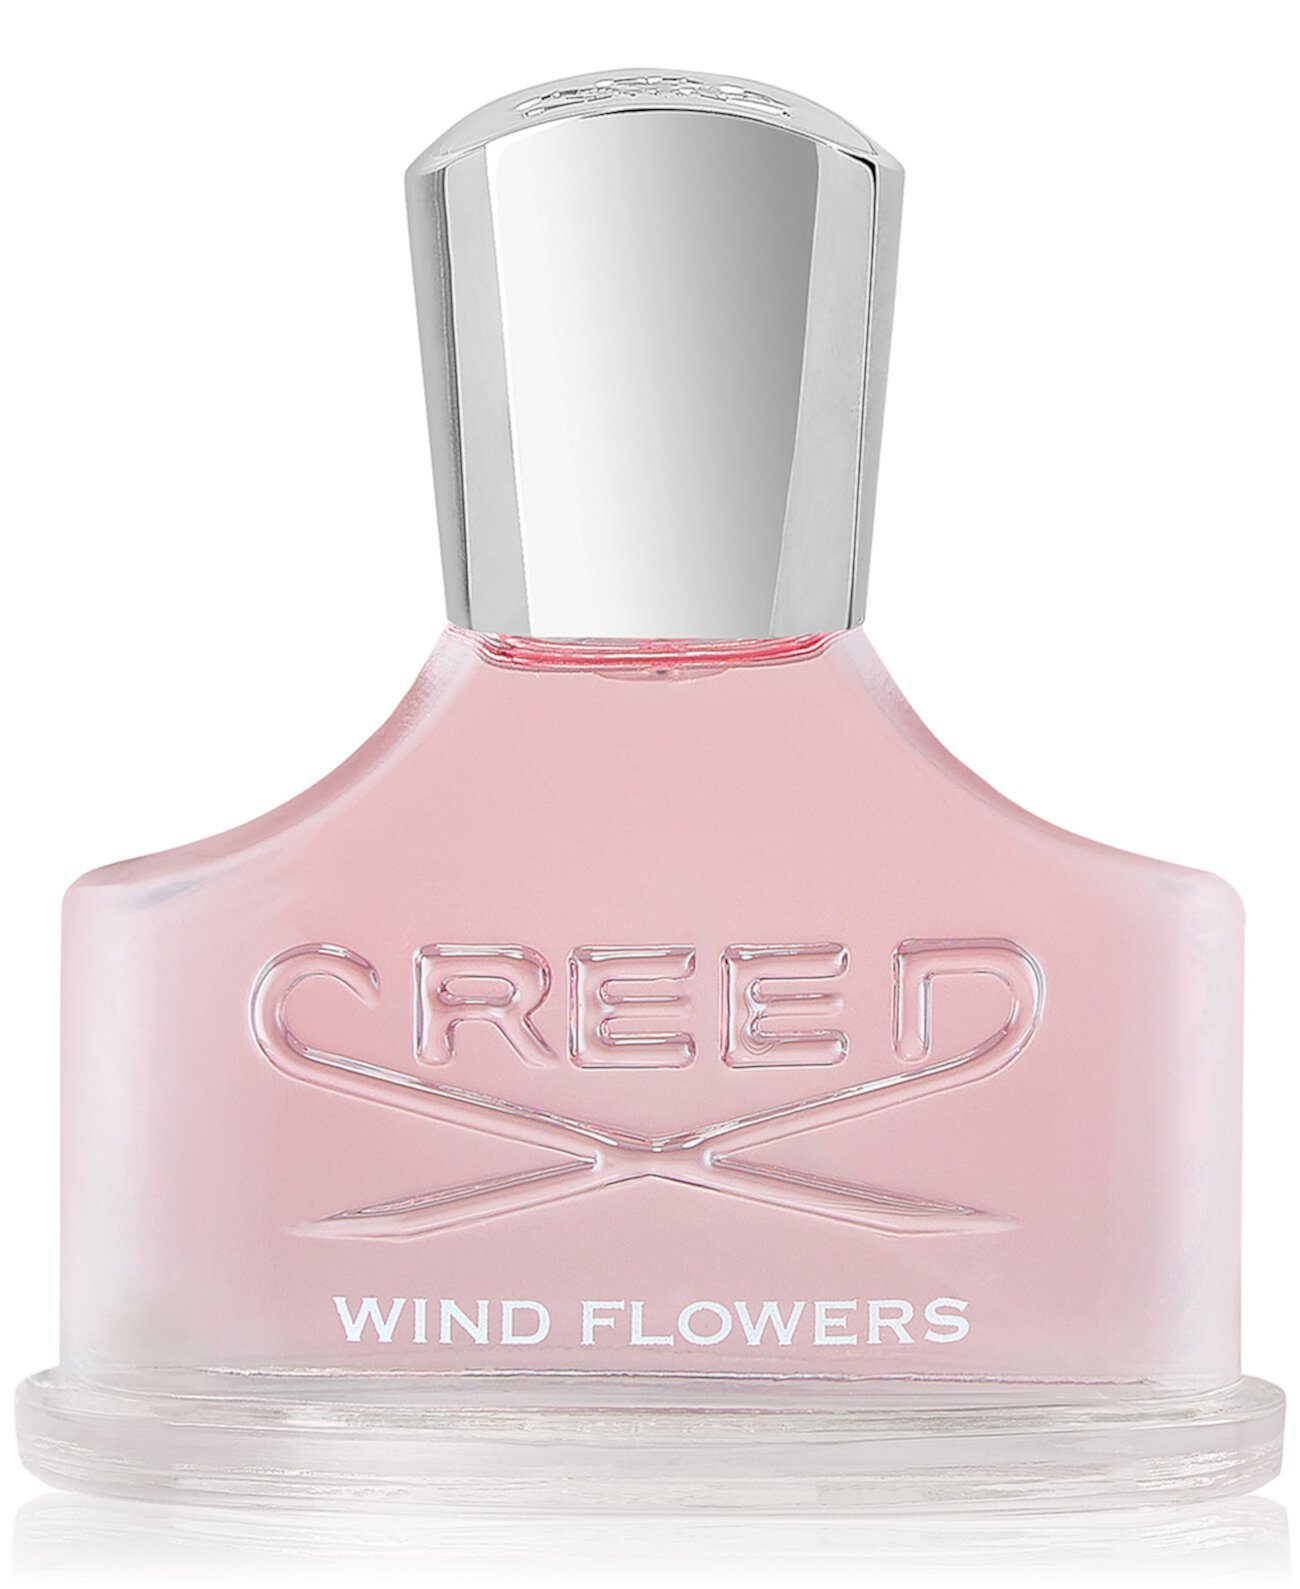 Wind Flowers, 1 oz. Creed